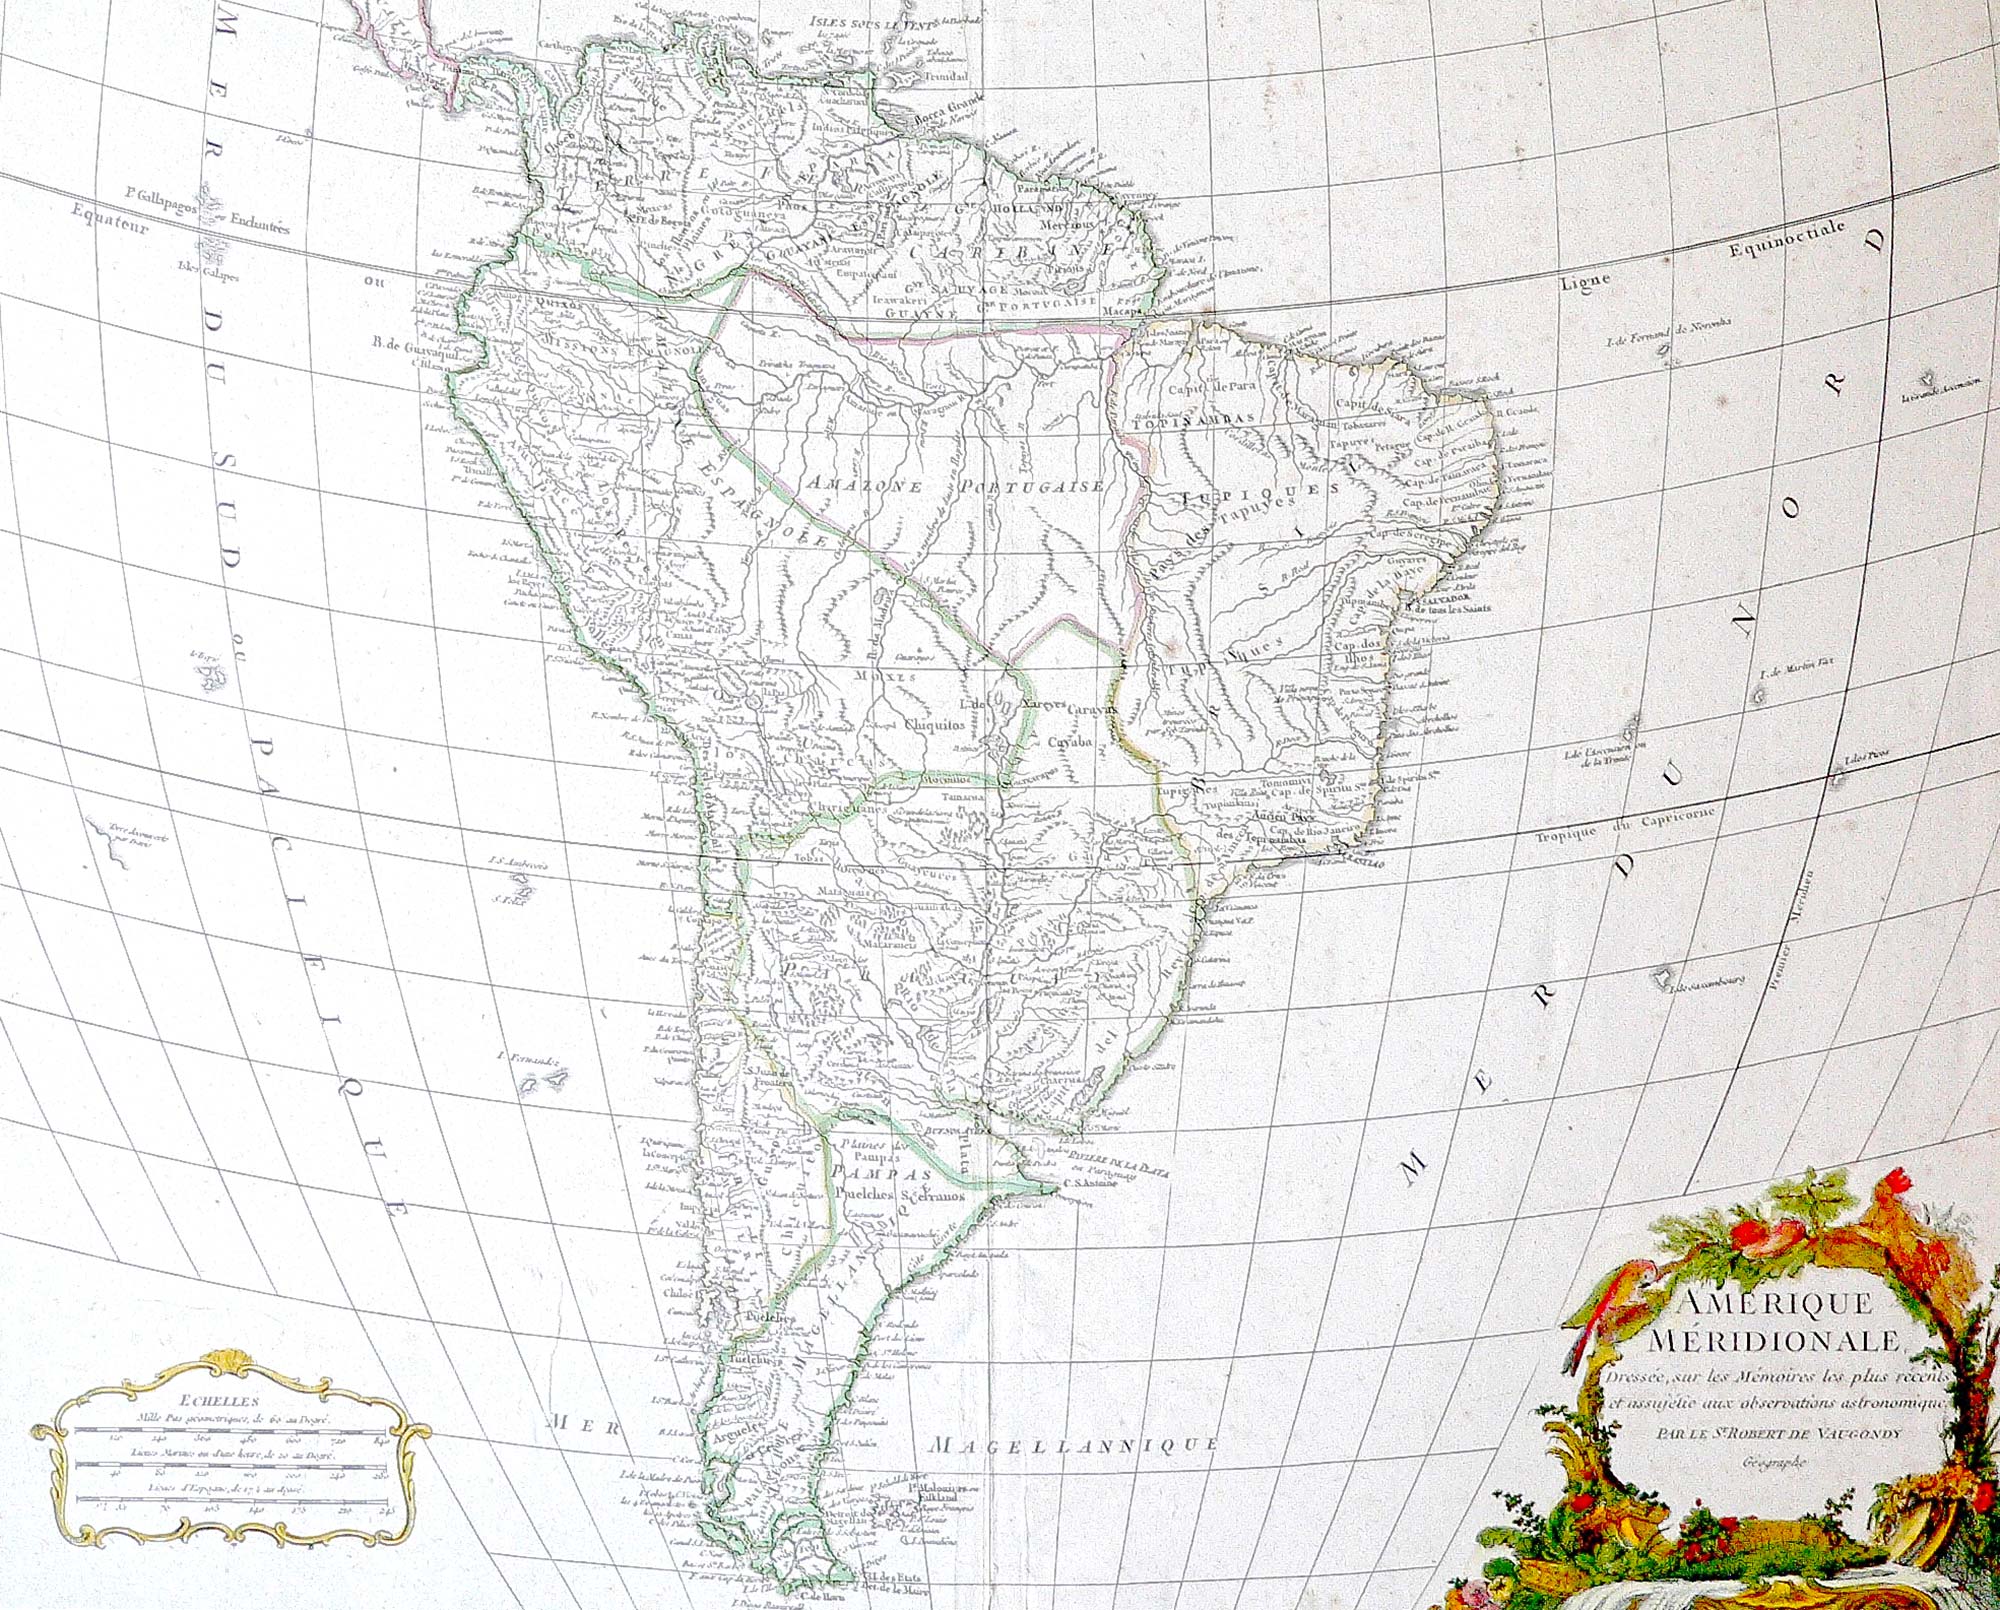 South America Historical Geography Map (1750 - Robert de Vaugondy)